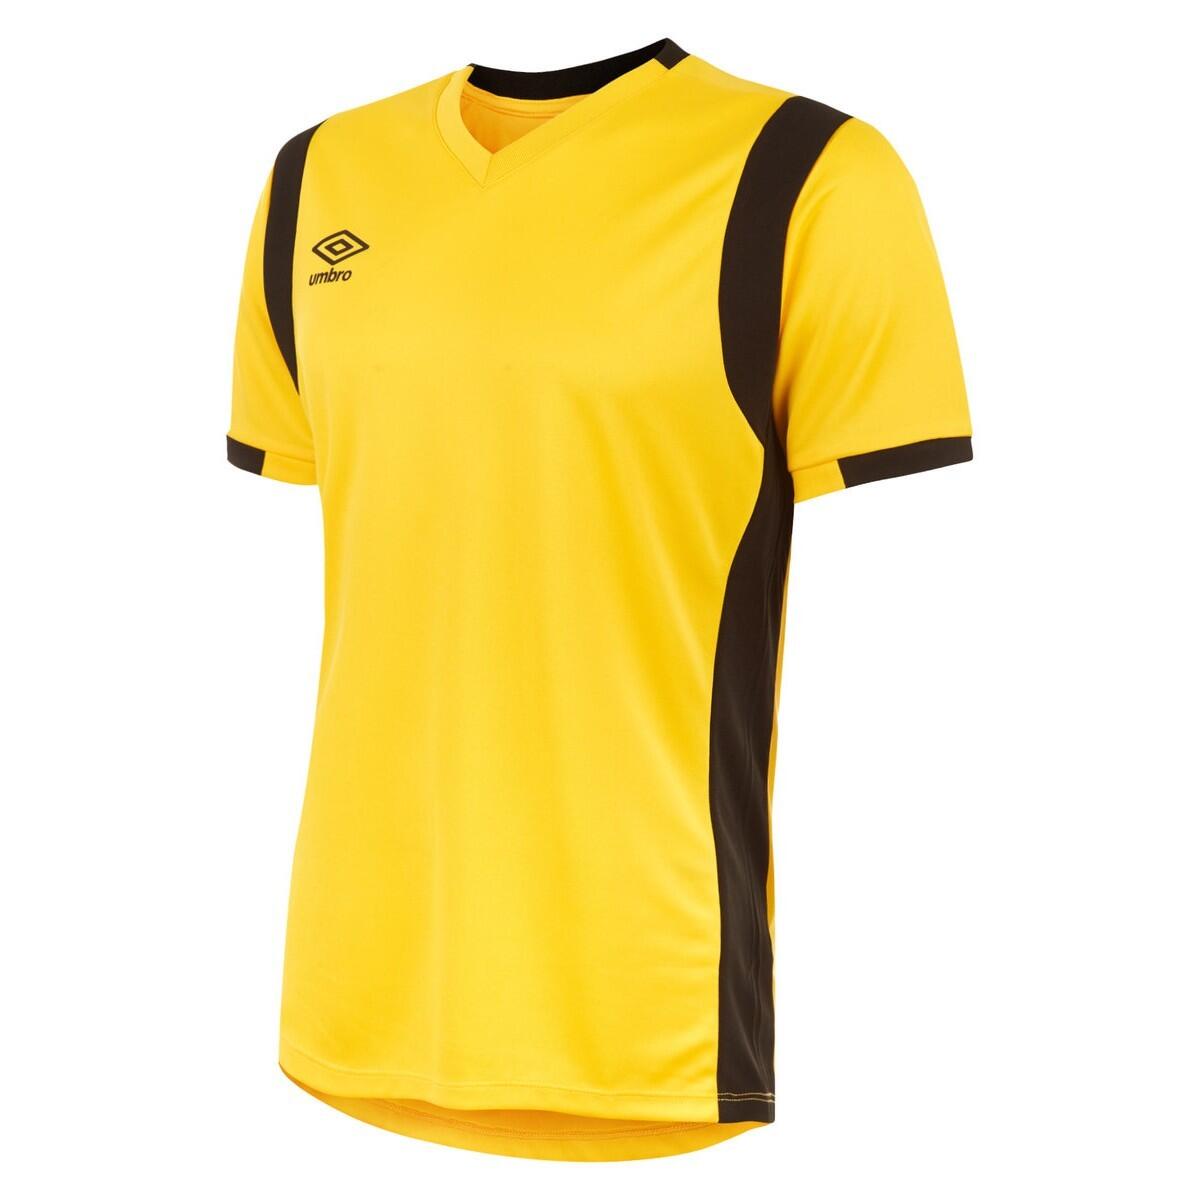 UMBRO Mens Spartan ShortSleeved Jersey (Yellow/Black)